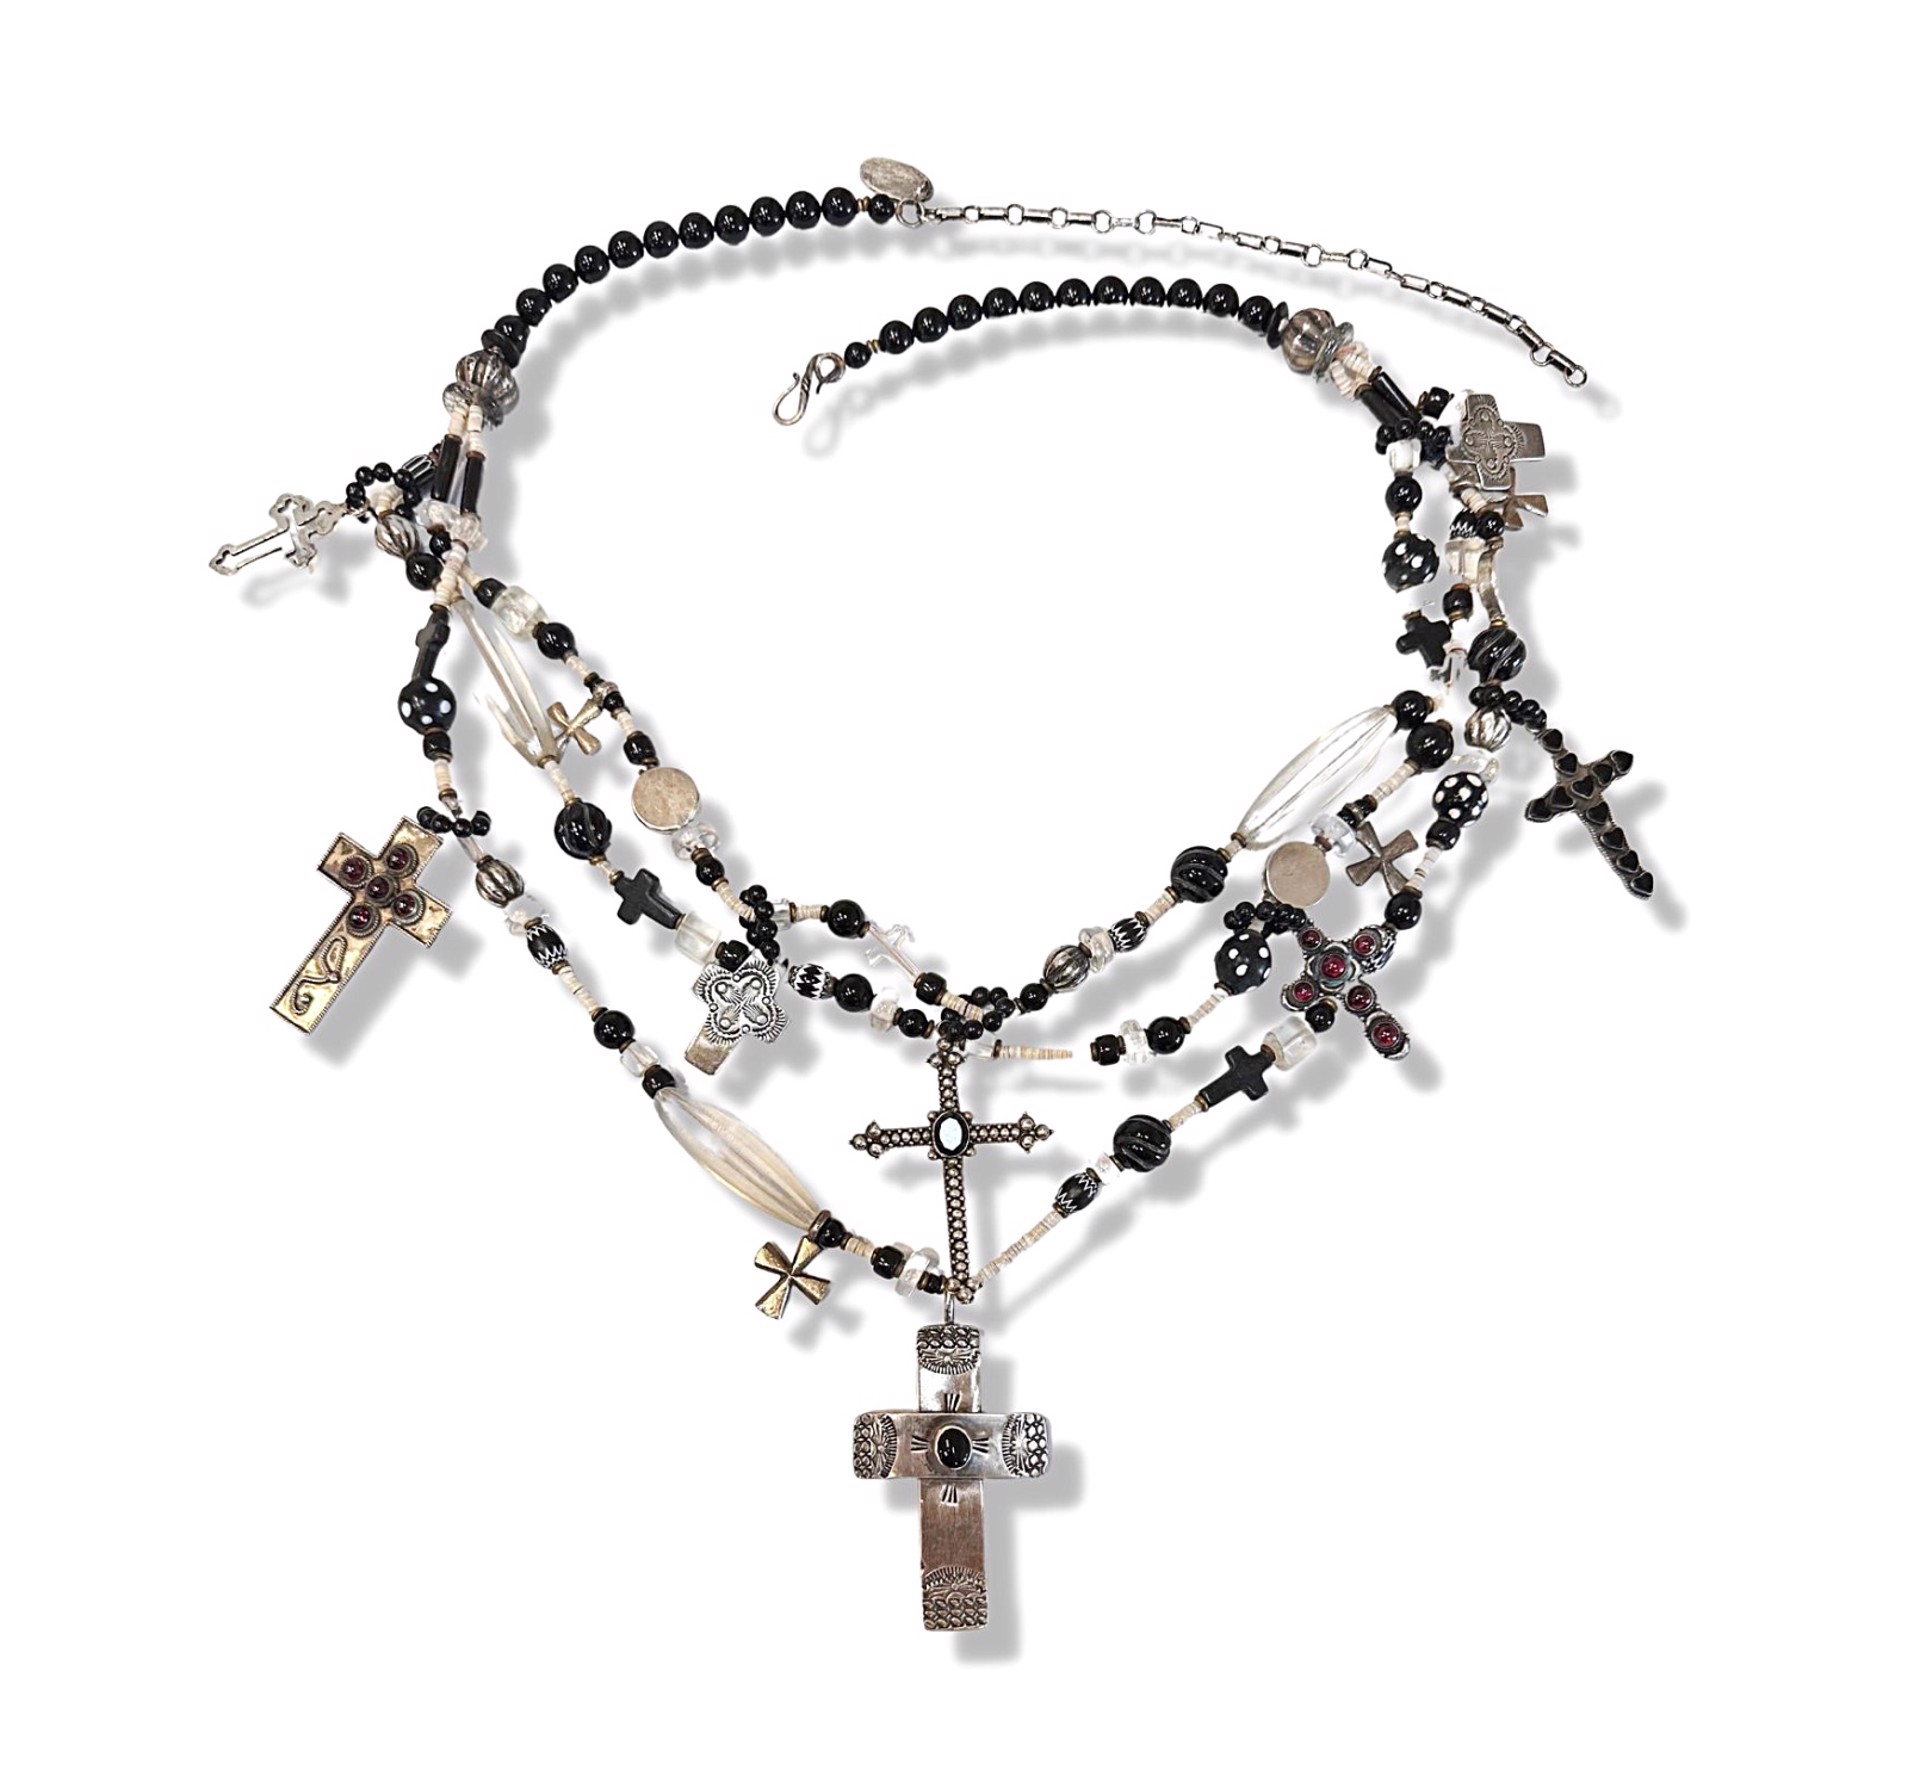 KY 271 - 3 Strand Onyx, Garnet, Rock Crystal and Oyster Shell Cross Necklace by Kim Yubeta